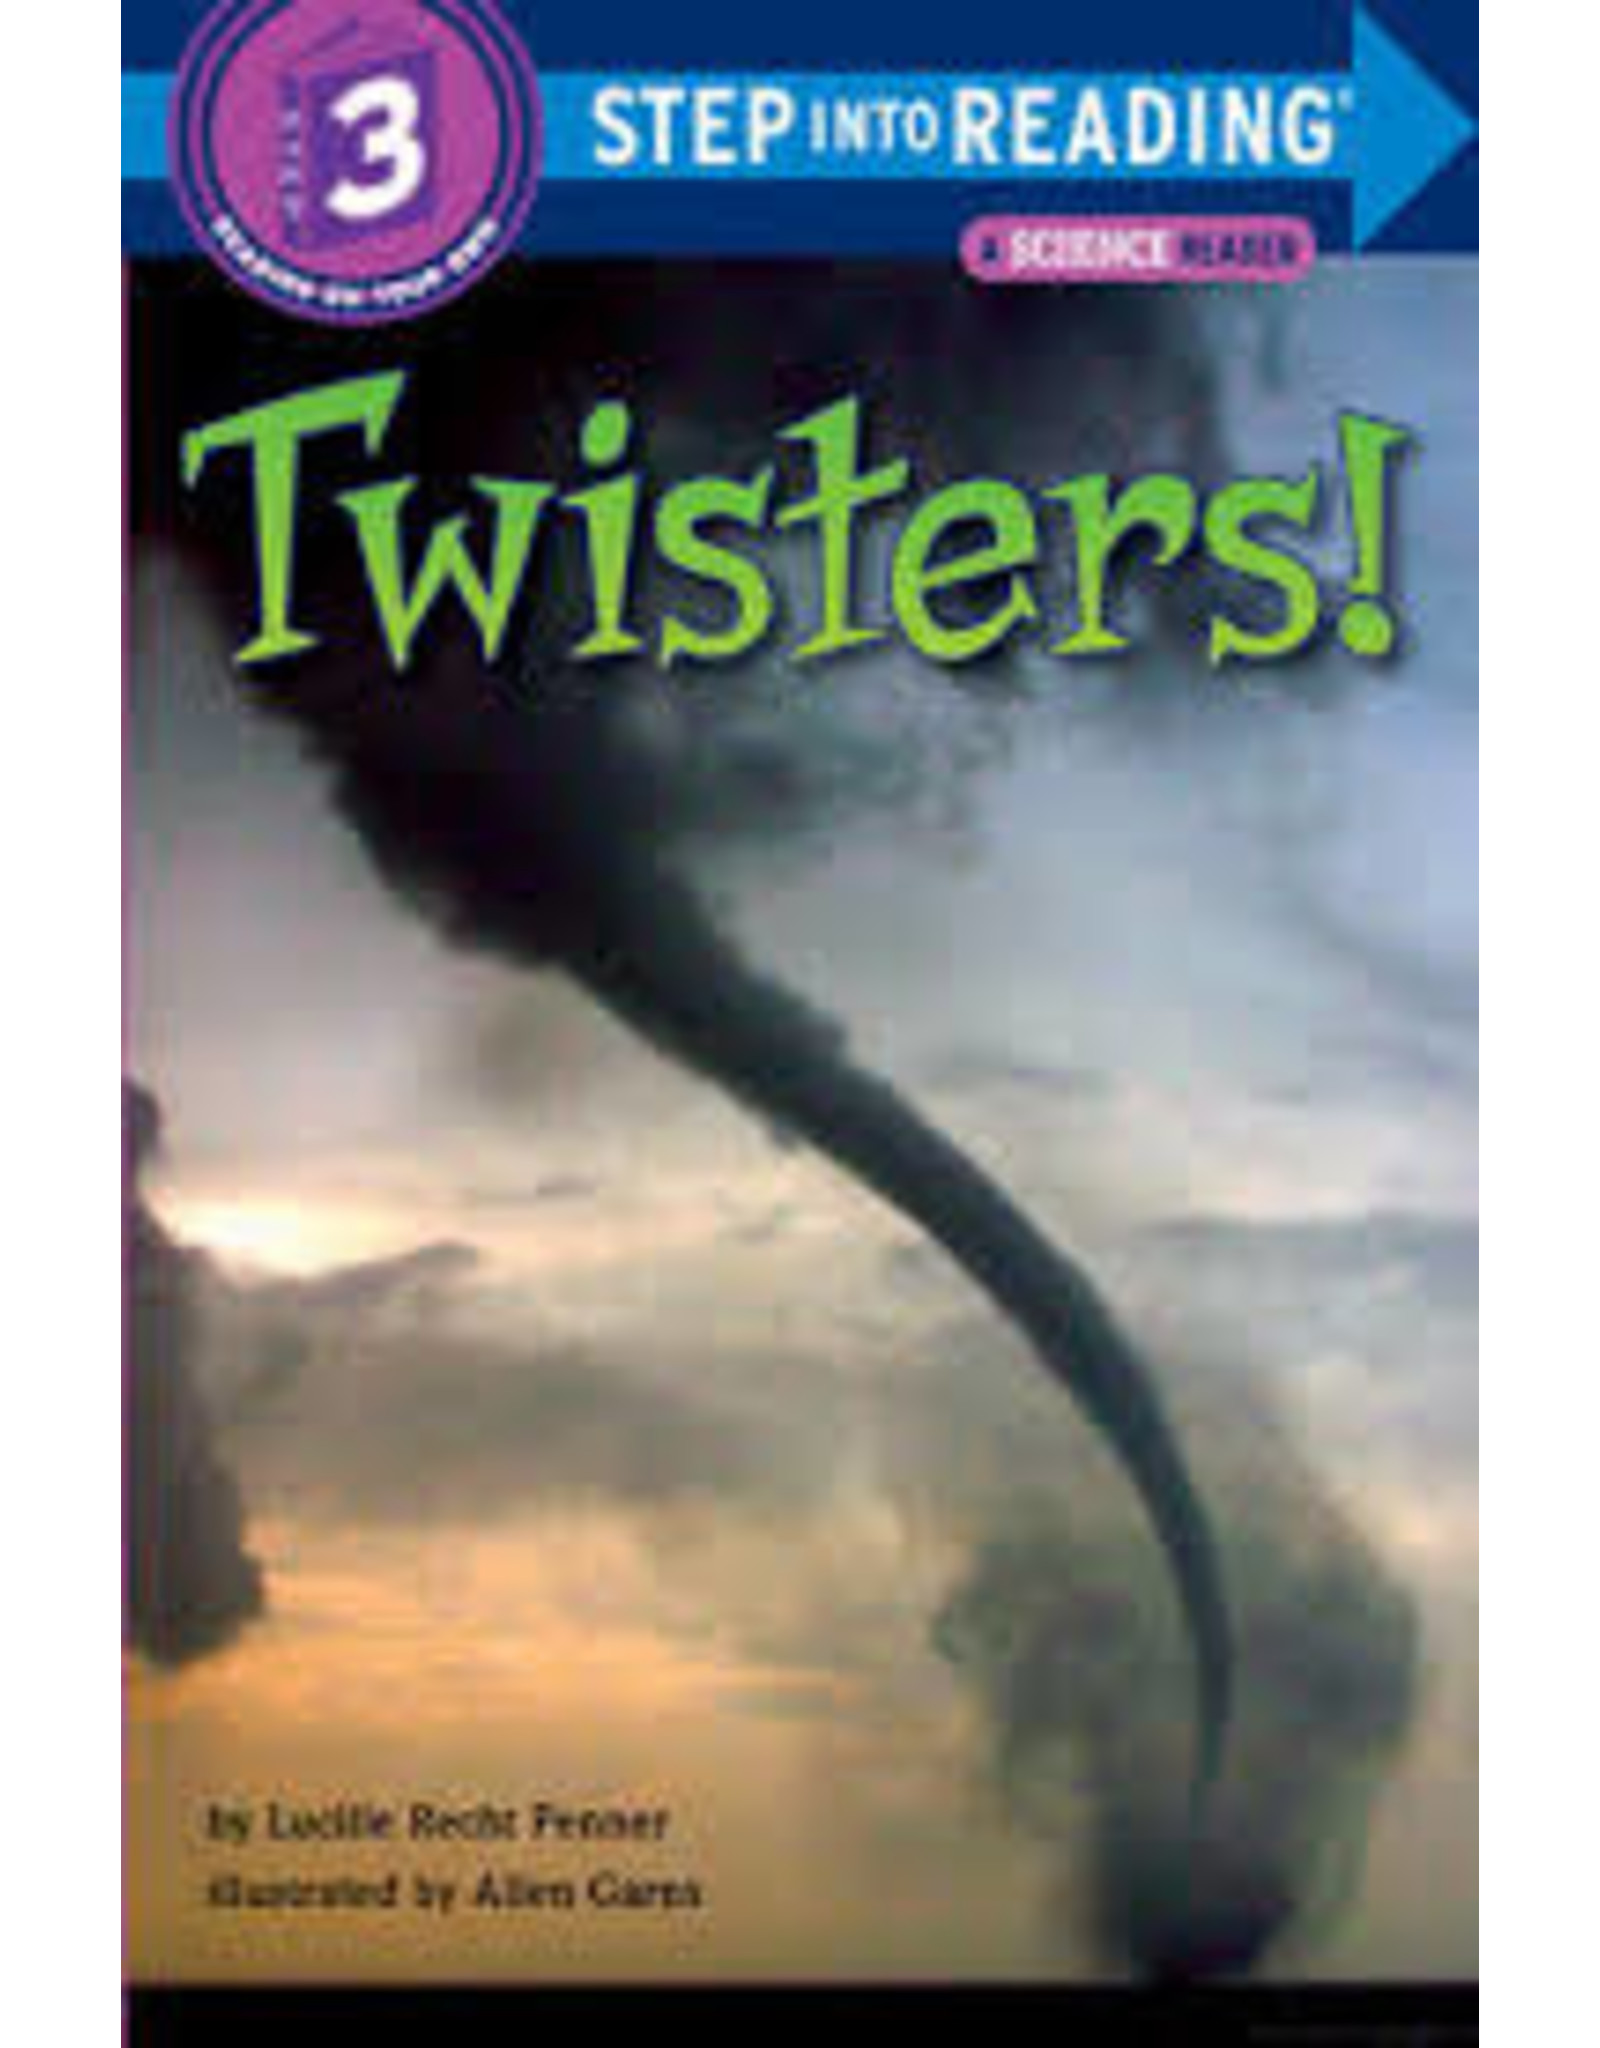 Twisters! - Lucille Recht Penner